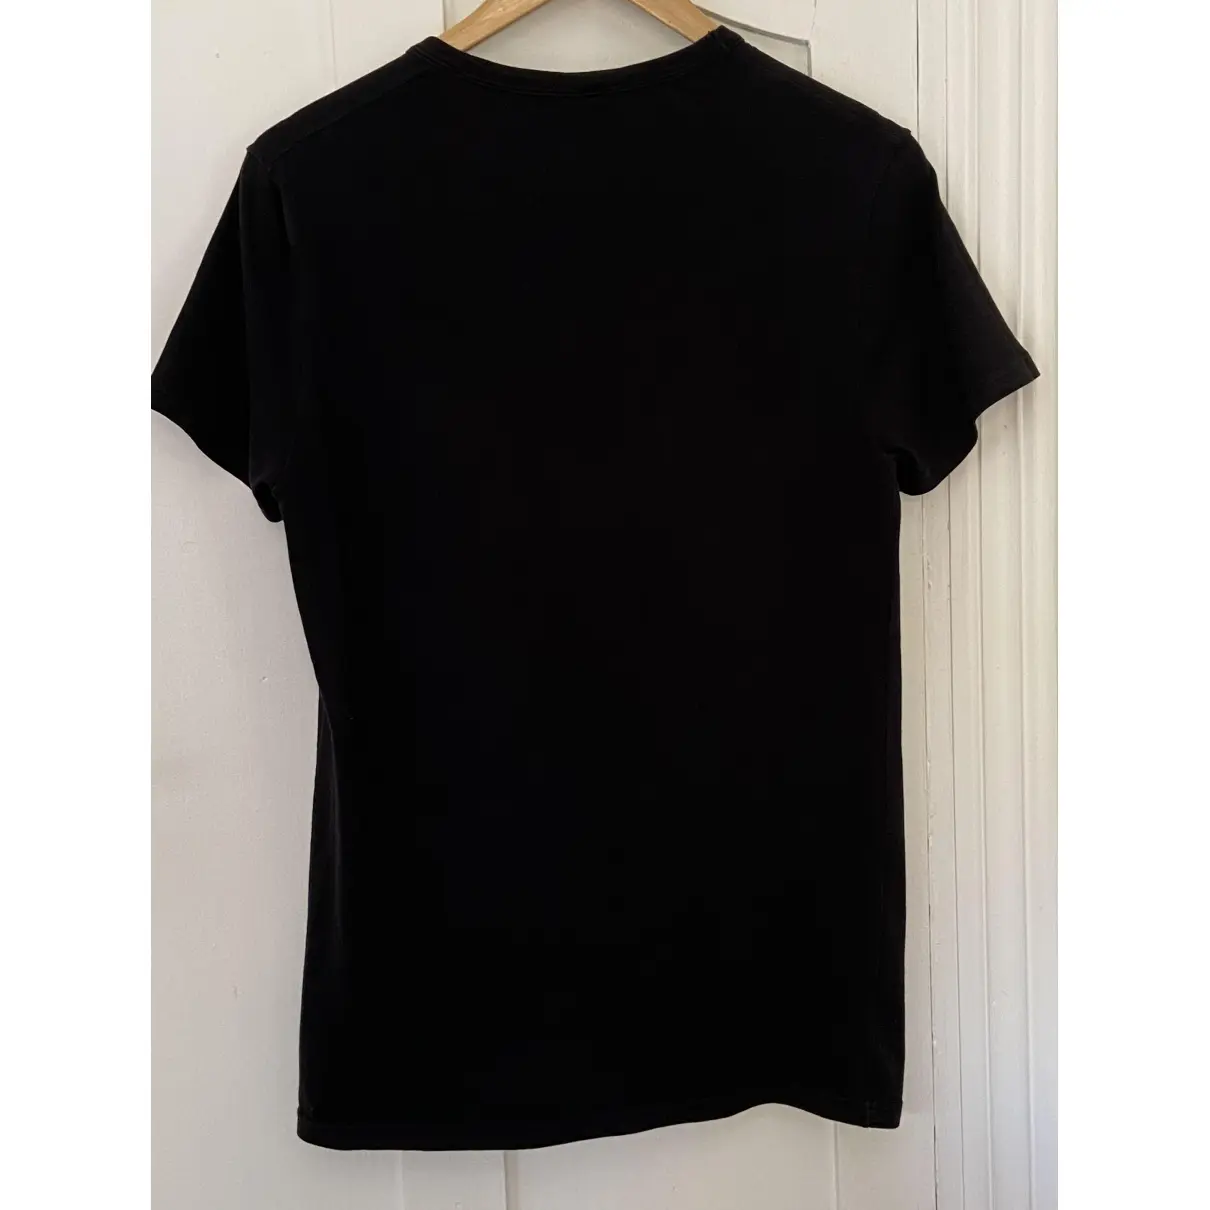 Buy John Galliano Black Cotton T-shirt online